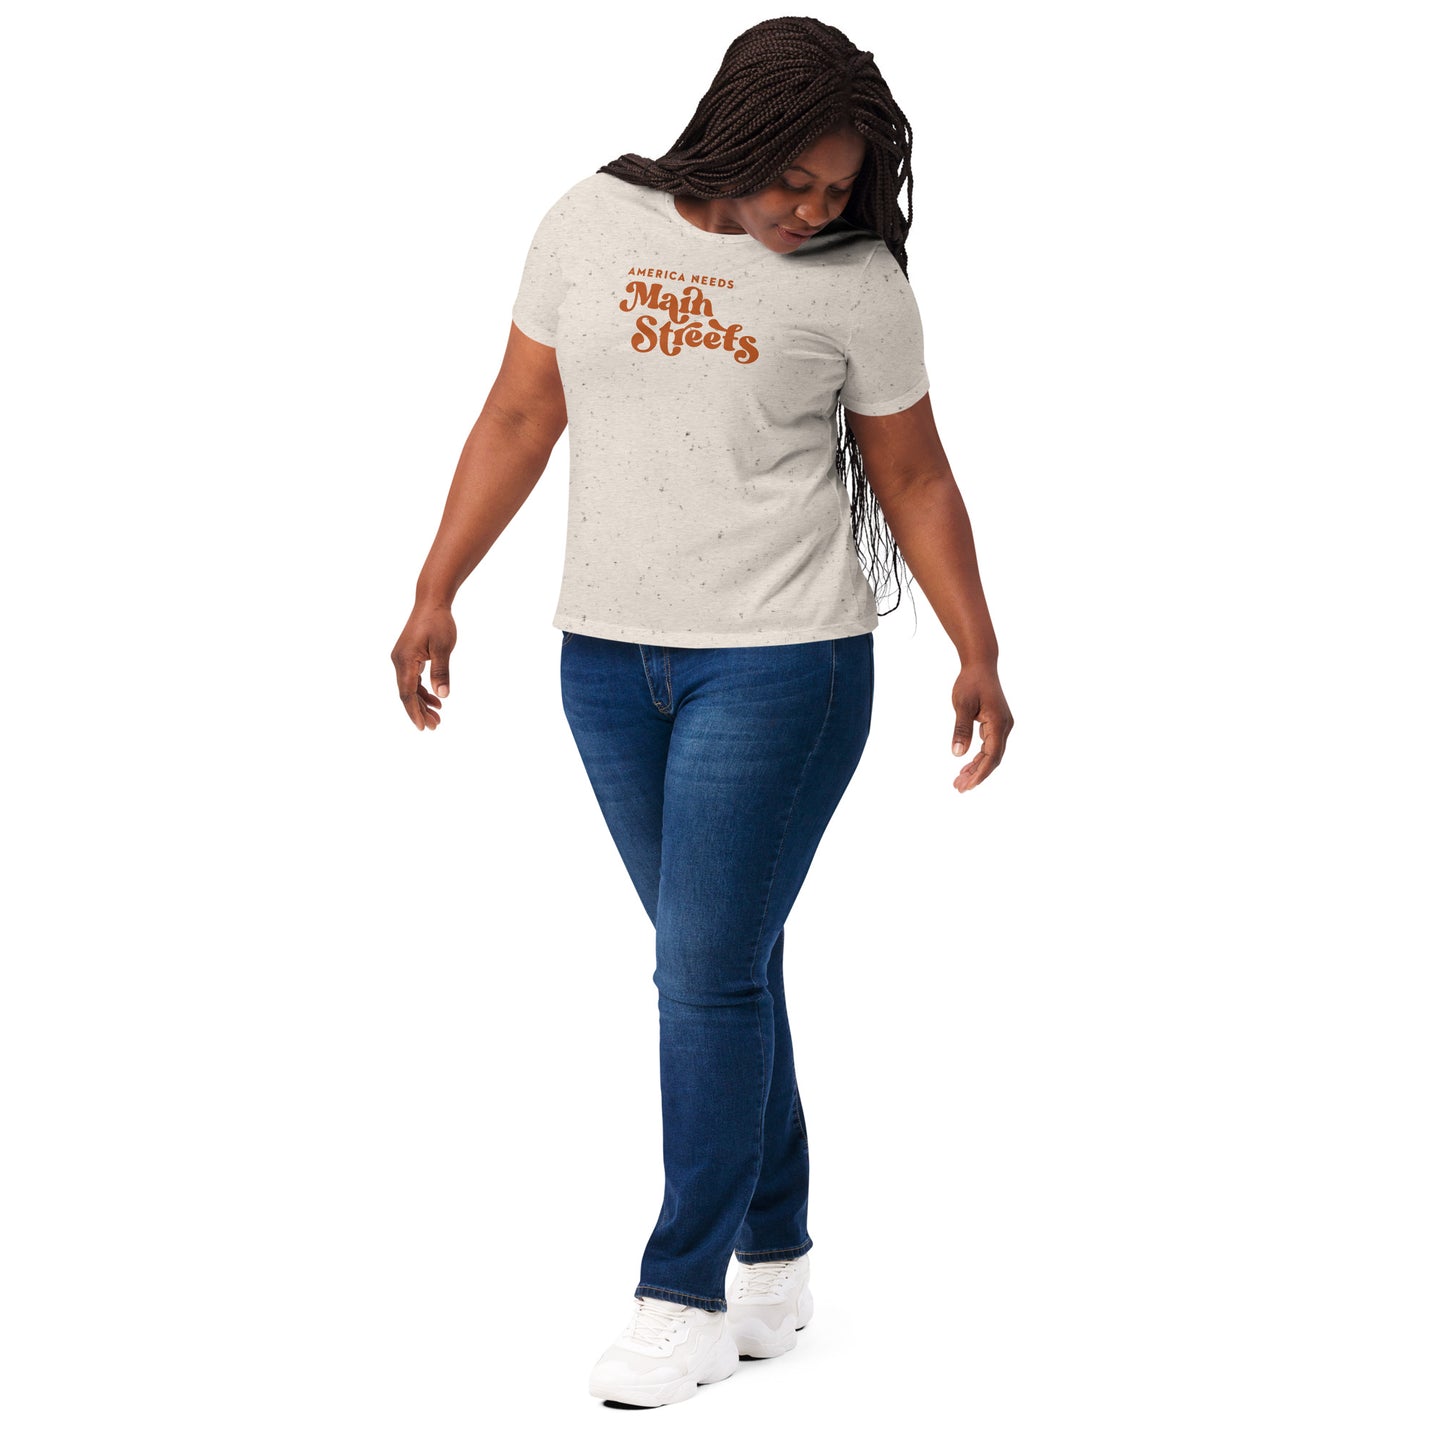 "America Needs Main Streets' White & Orange Women’s Relaxed Tri-Blend t-shirt